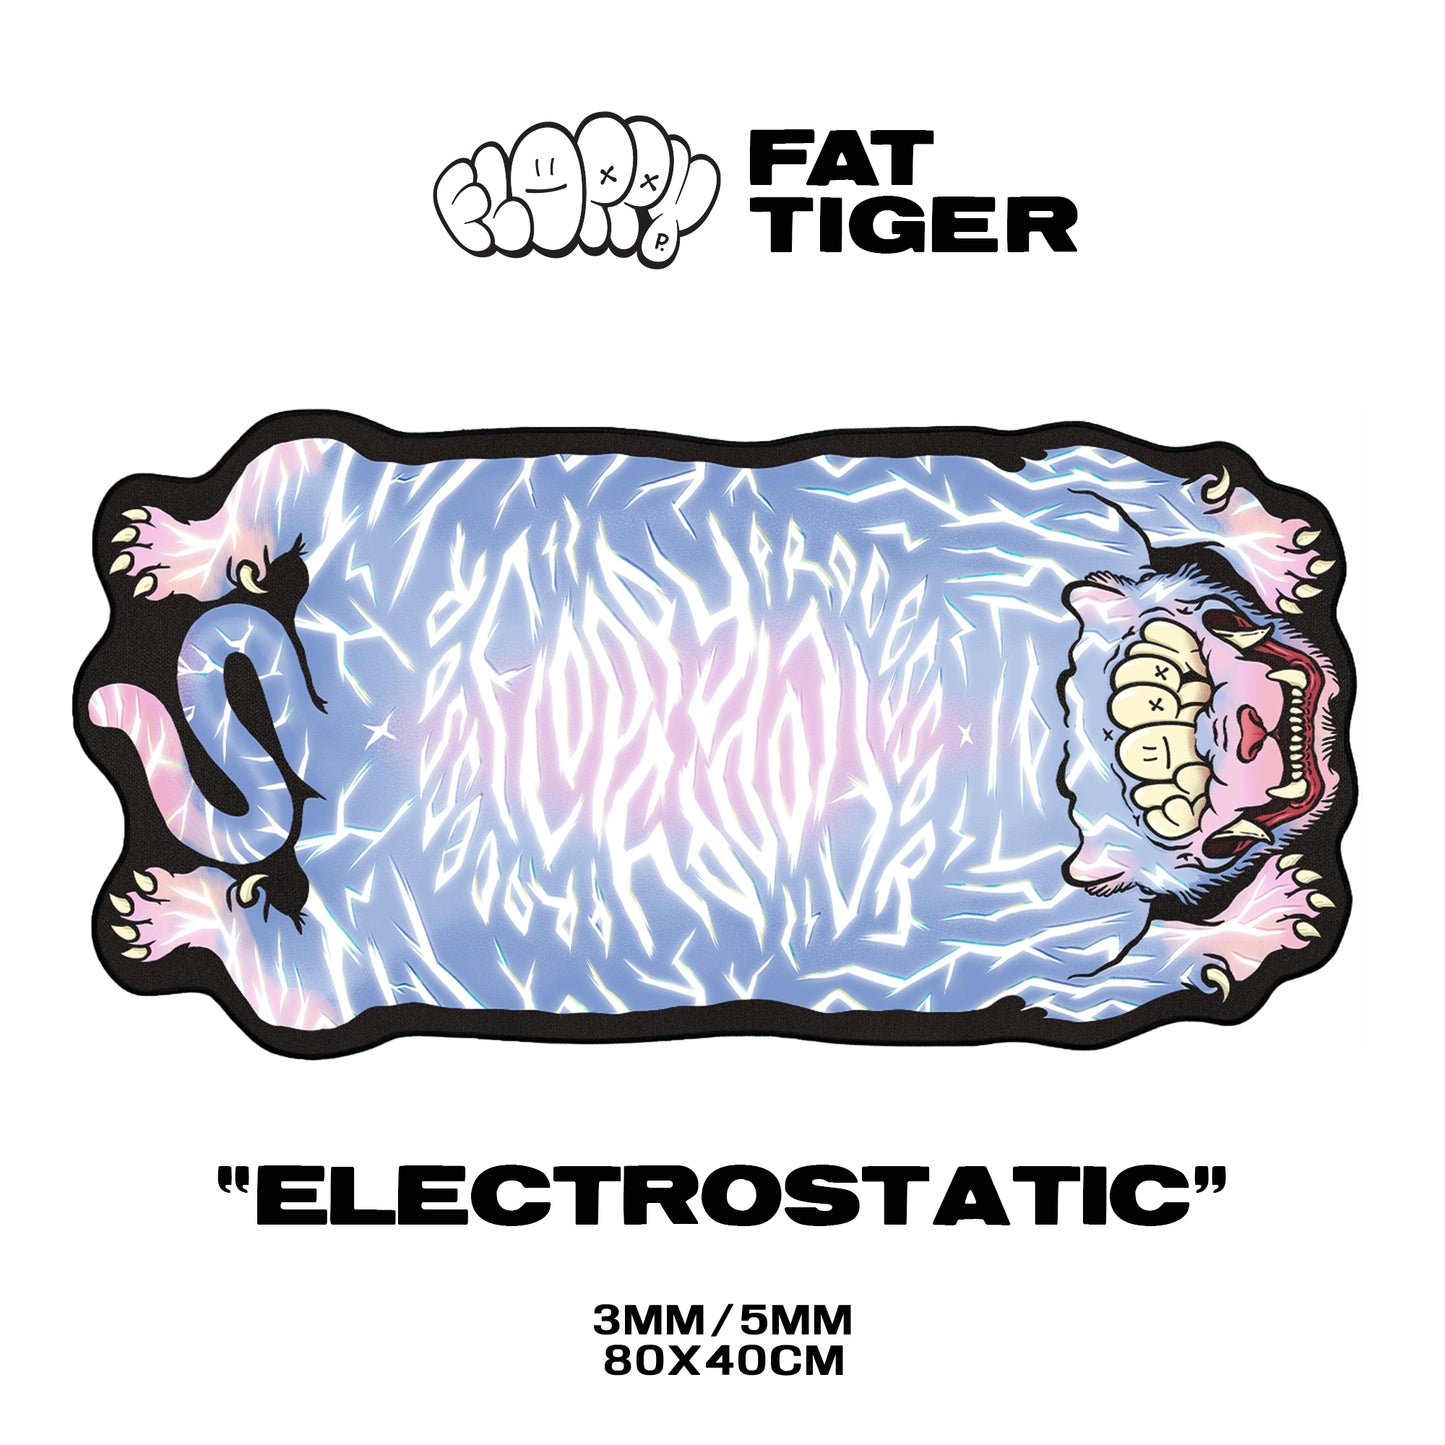 Floppy Fat Tiger - Electrostatic - Custom Shape 80x40CM